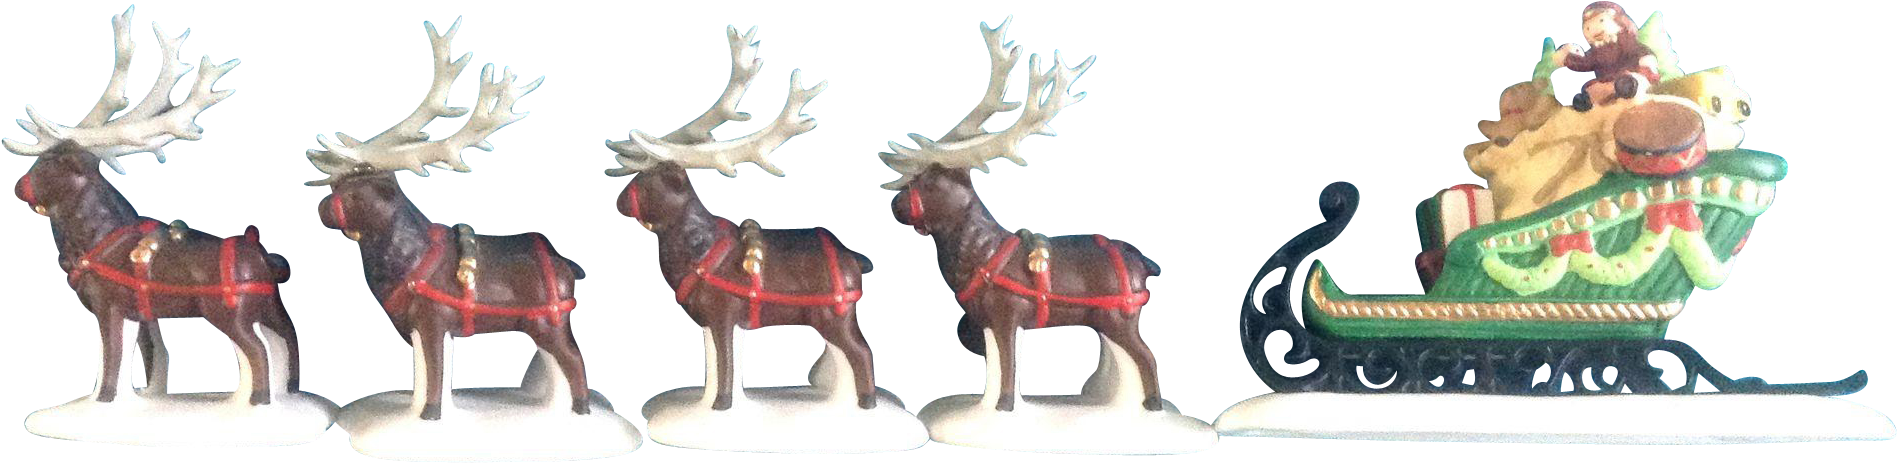 Christmas Reindeerand Sleigh Decoration PNG image